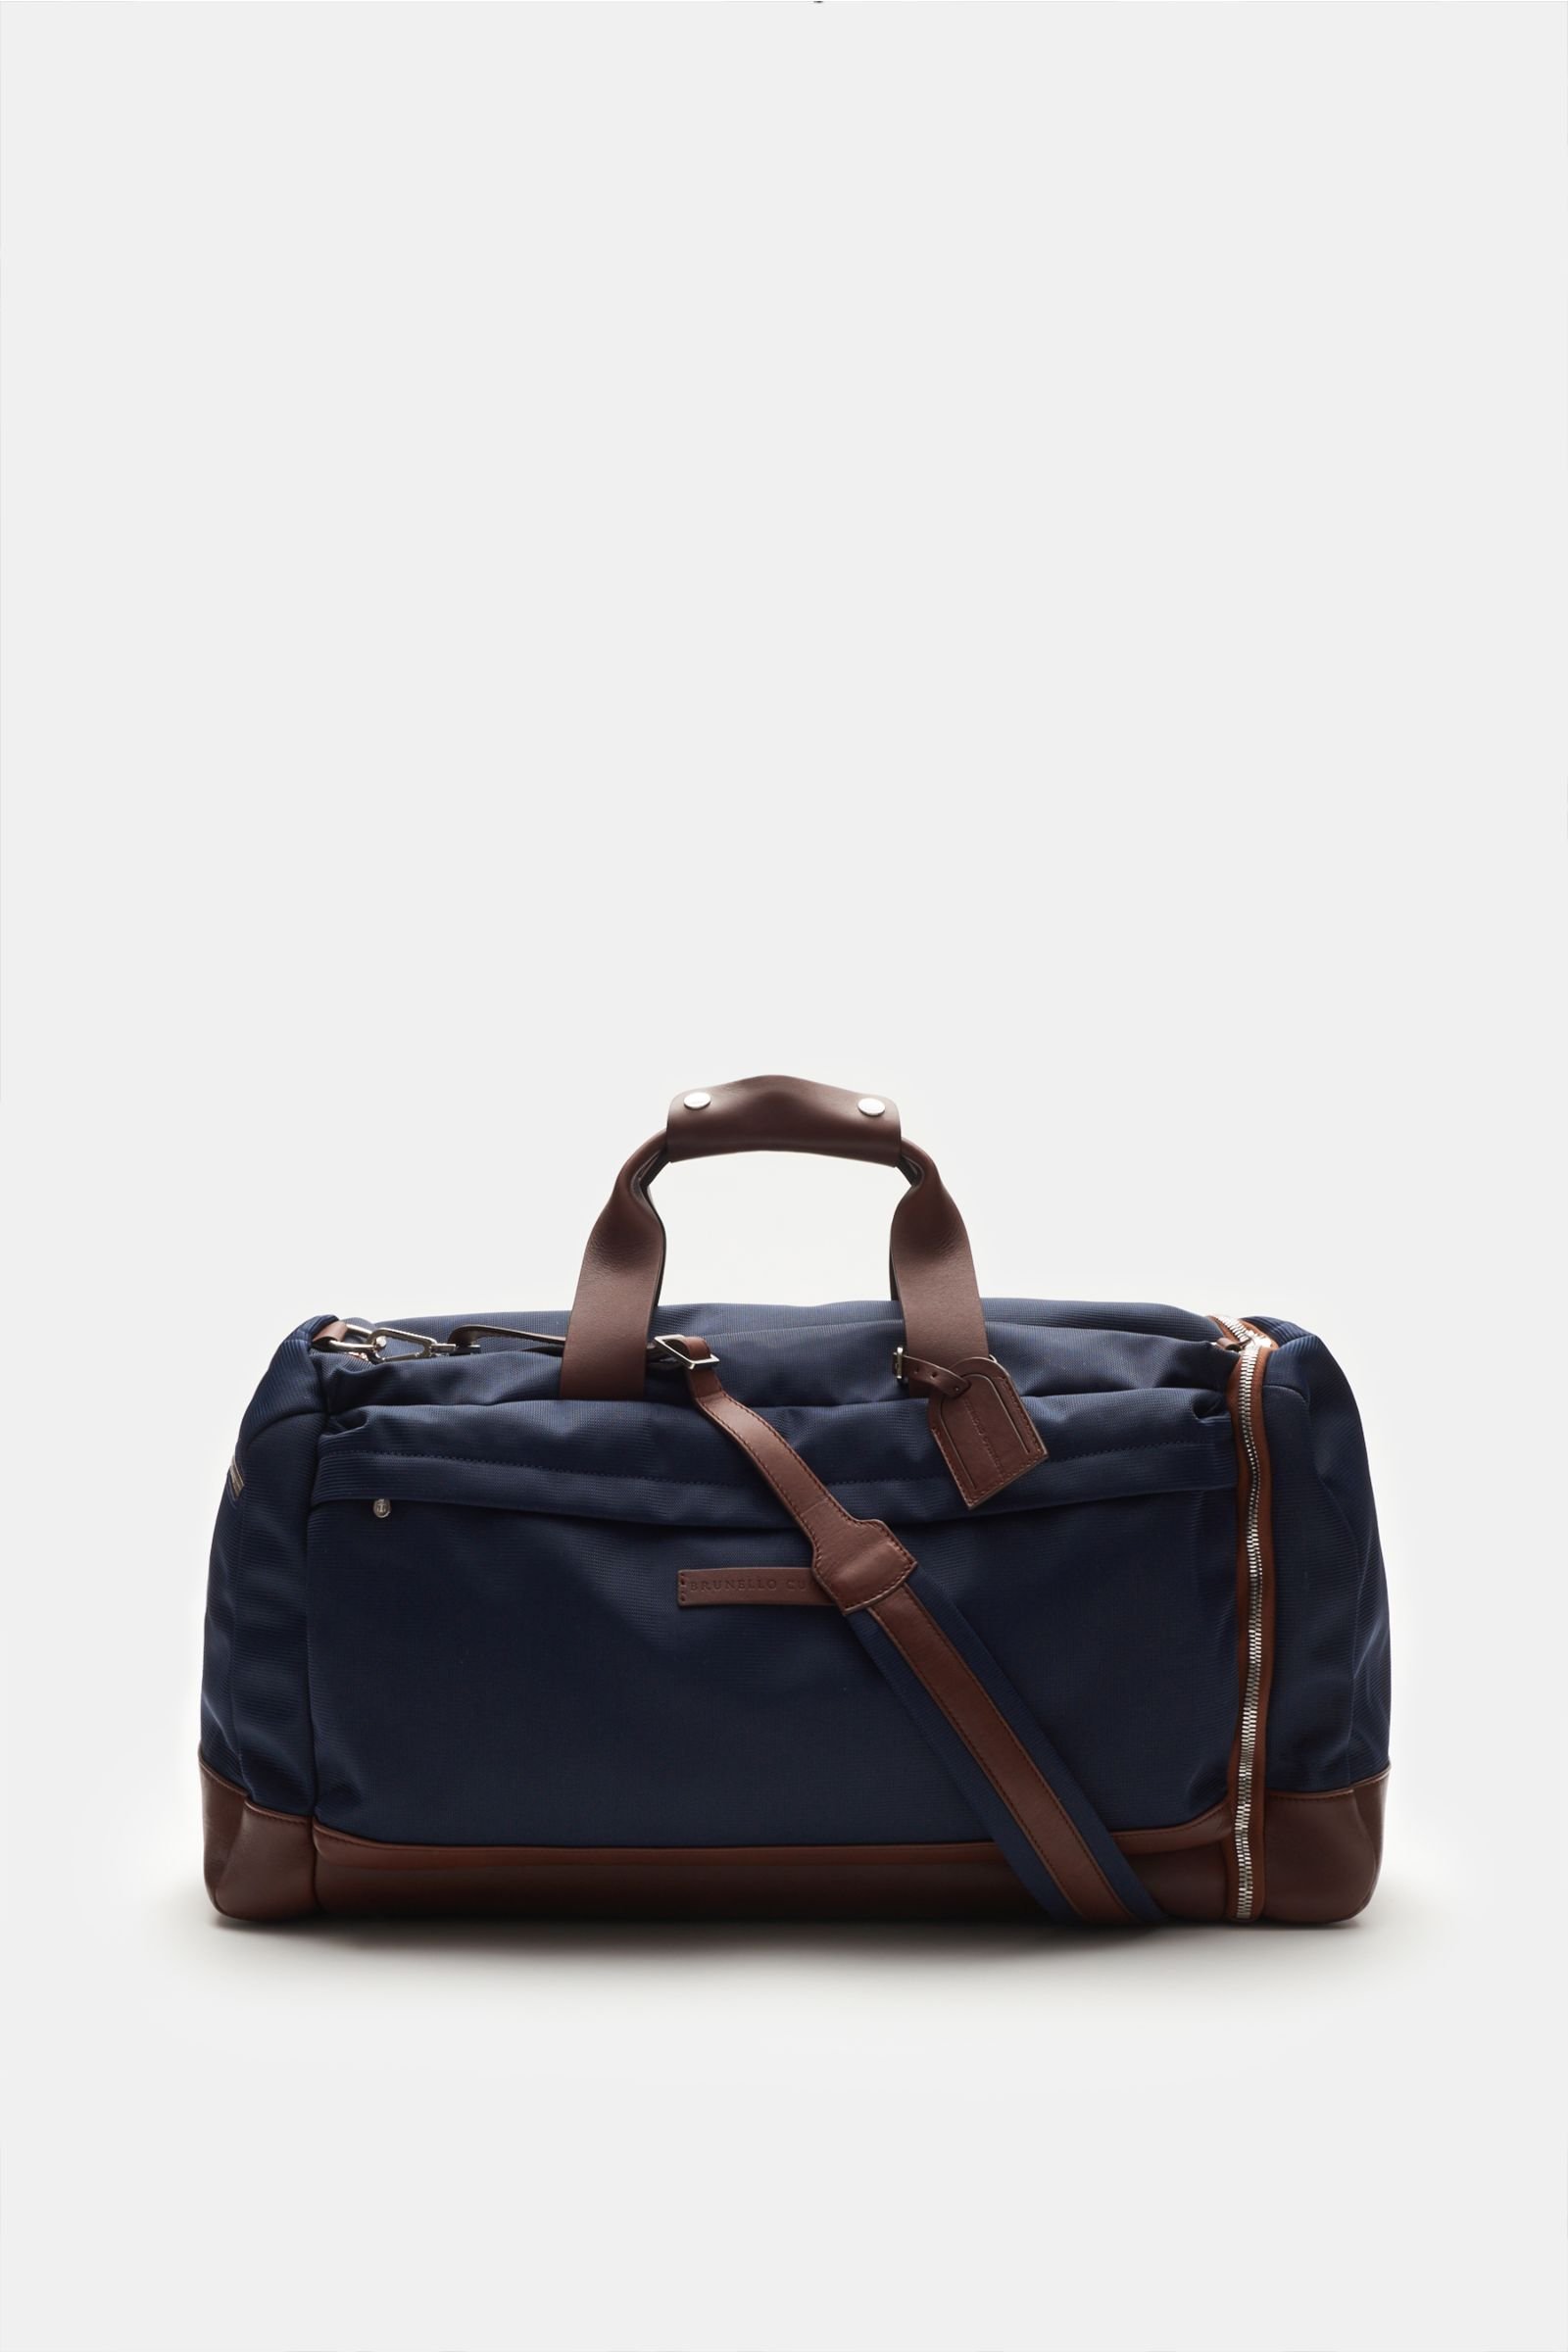 Travel bag navy/dark brown